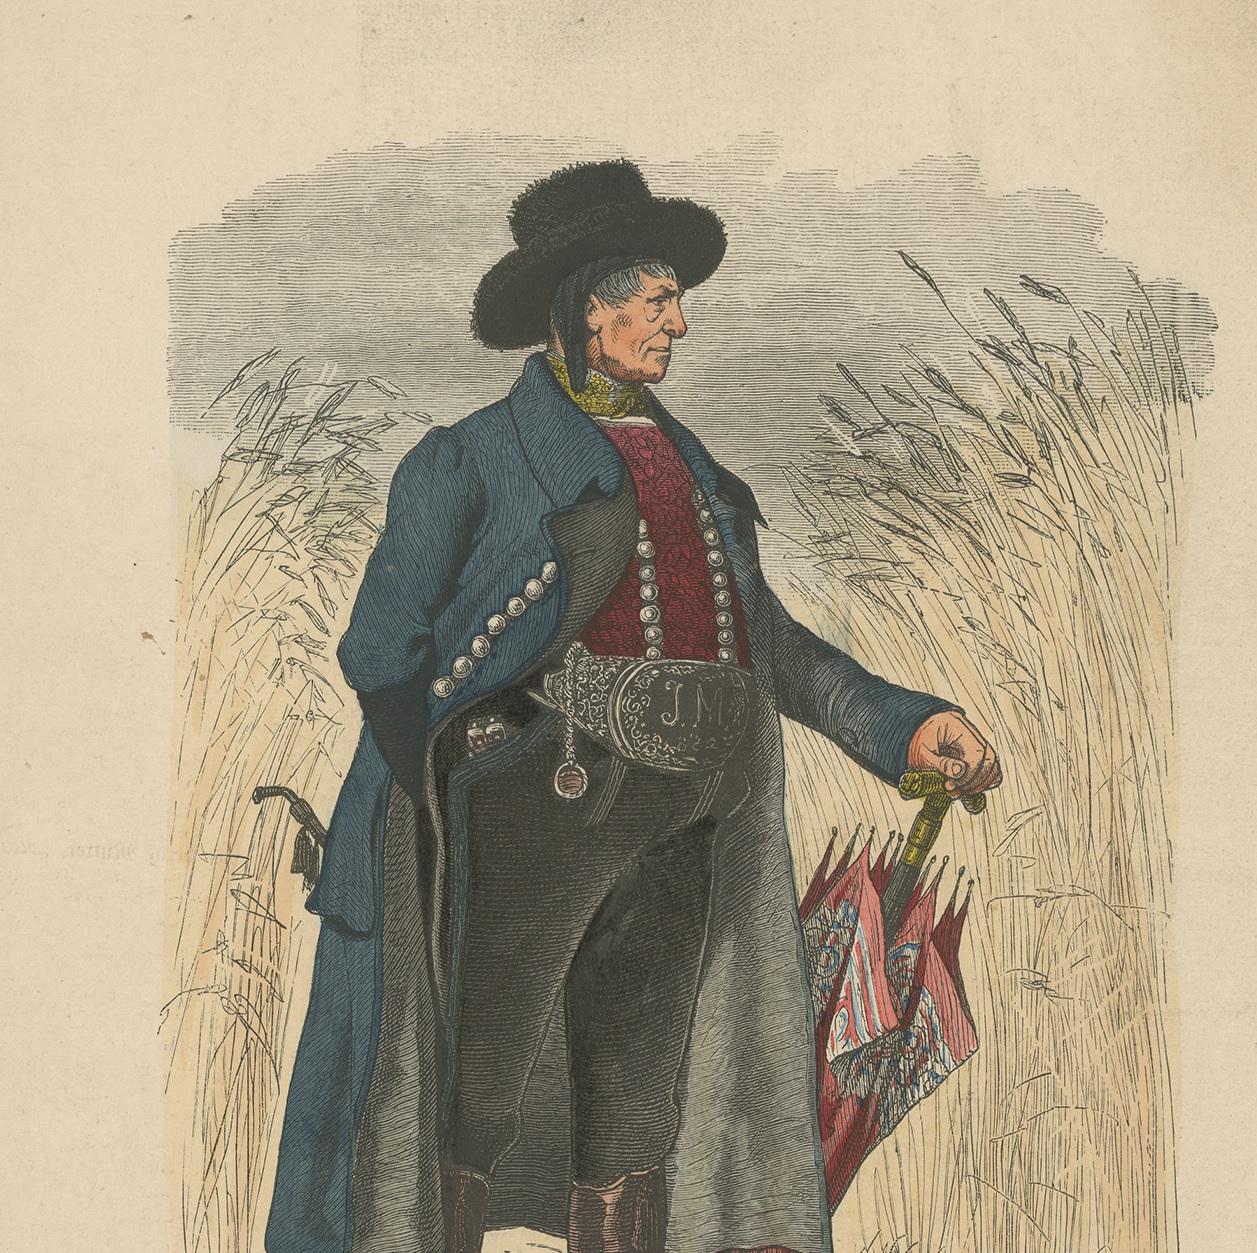 19th century farmer clothing